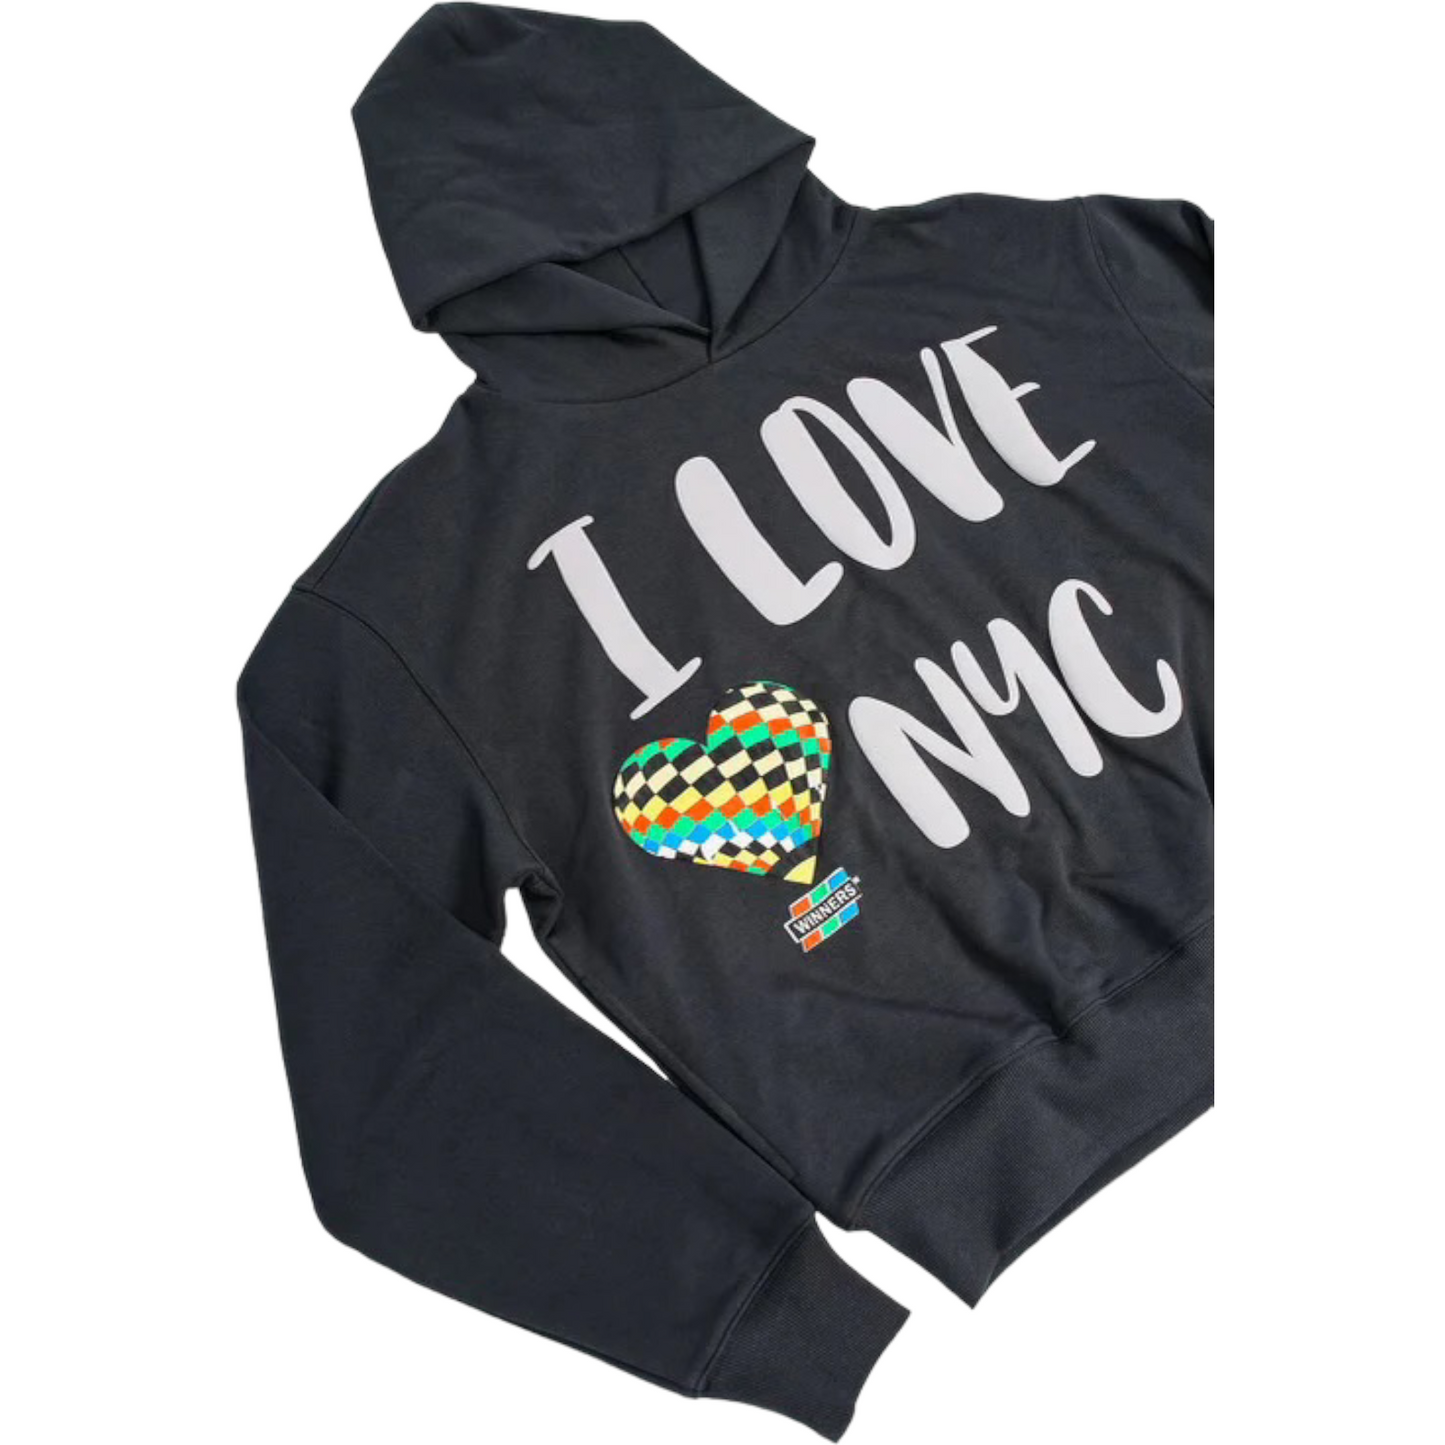 I Love Winners NYC Hoodie - Grey